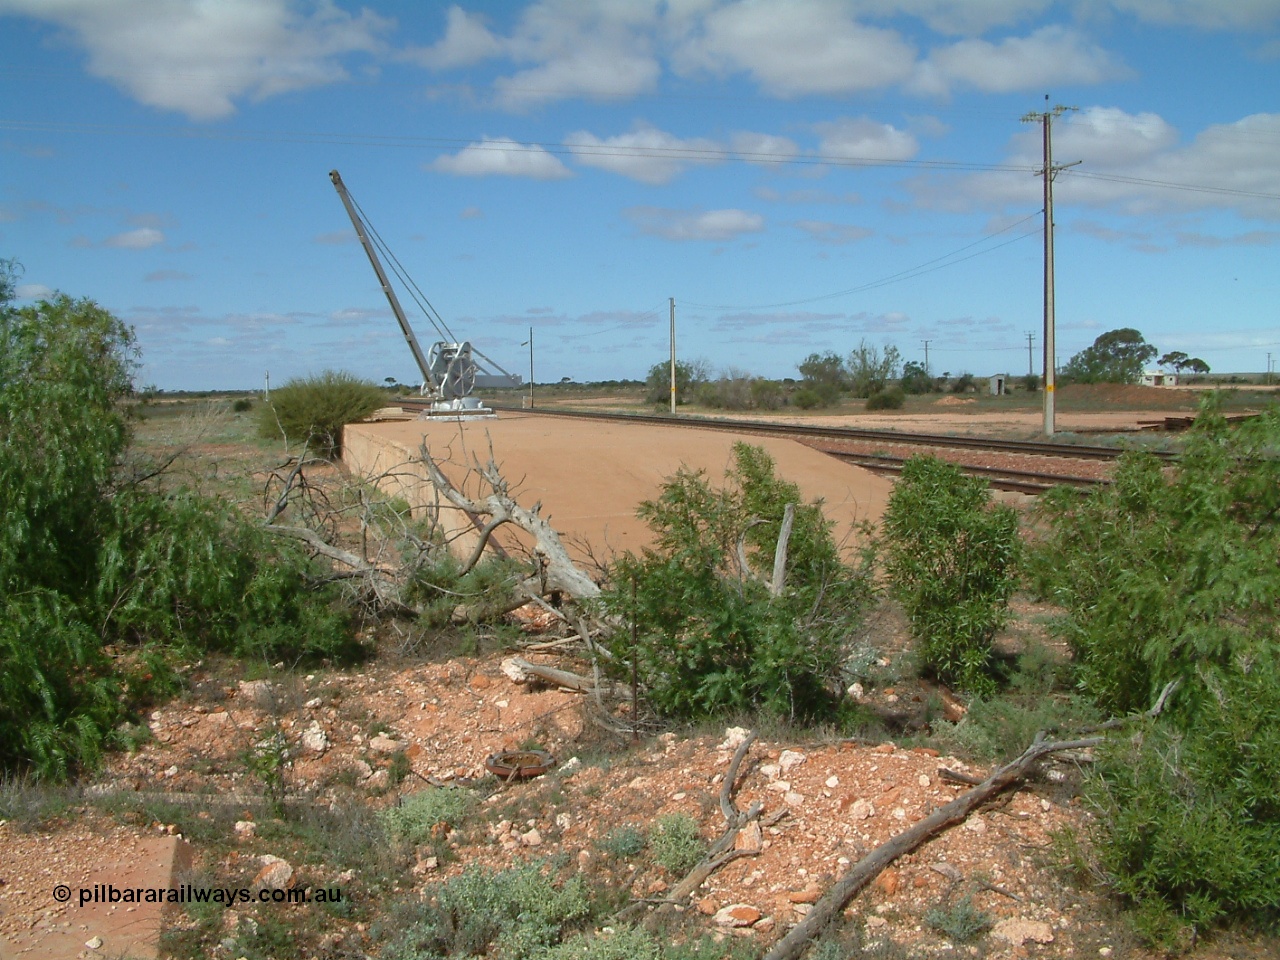 030415 135950
Kingoonya, located at the 426.5 km on the Trans Australian Railway, loading ramp and crane. [url=https://goo.gl/maps/JoaJ36uYKDkgepas9]GeoData location[/url].
